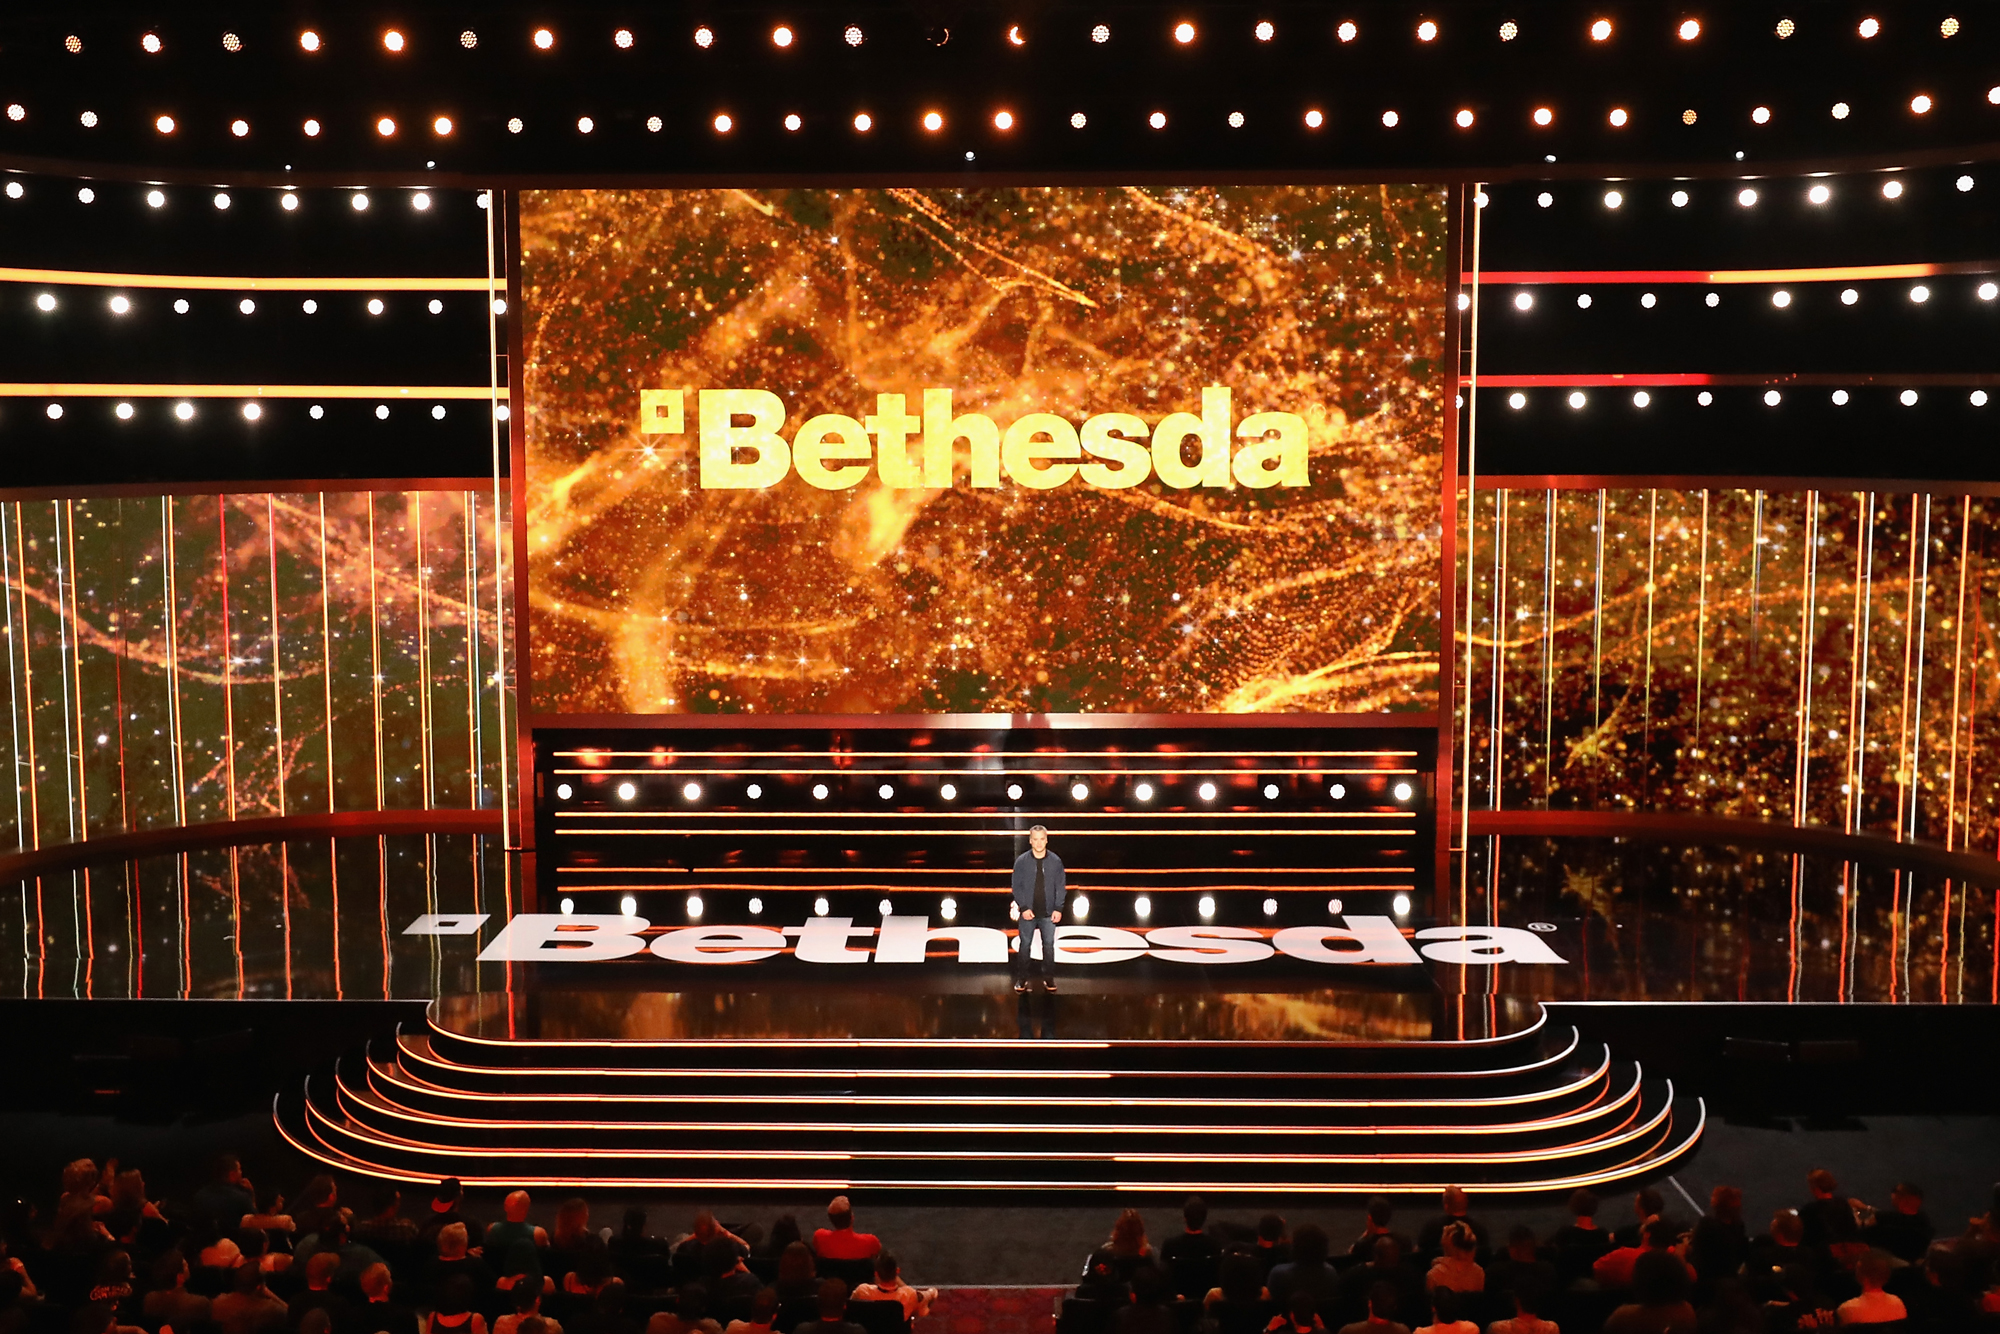 Vice President of Bethesda Softworks, speaks during the Bethesda E3 Showcase